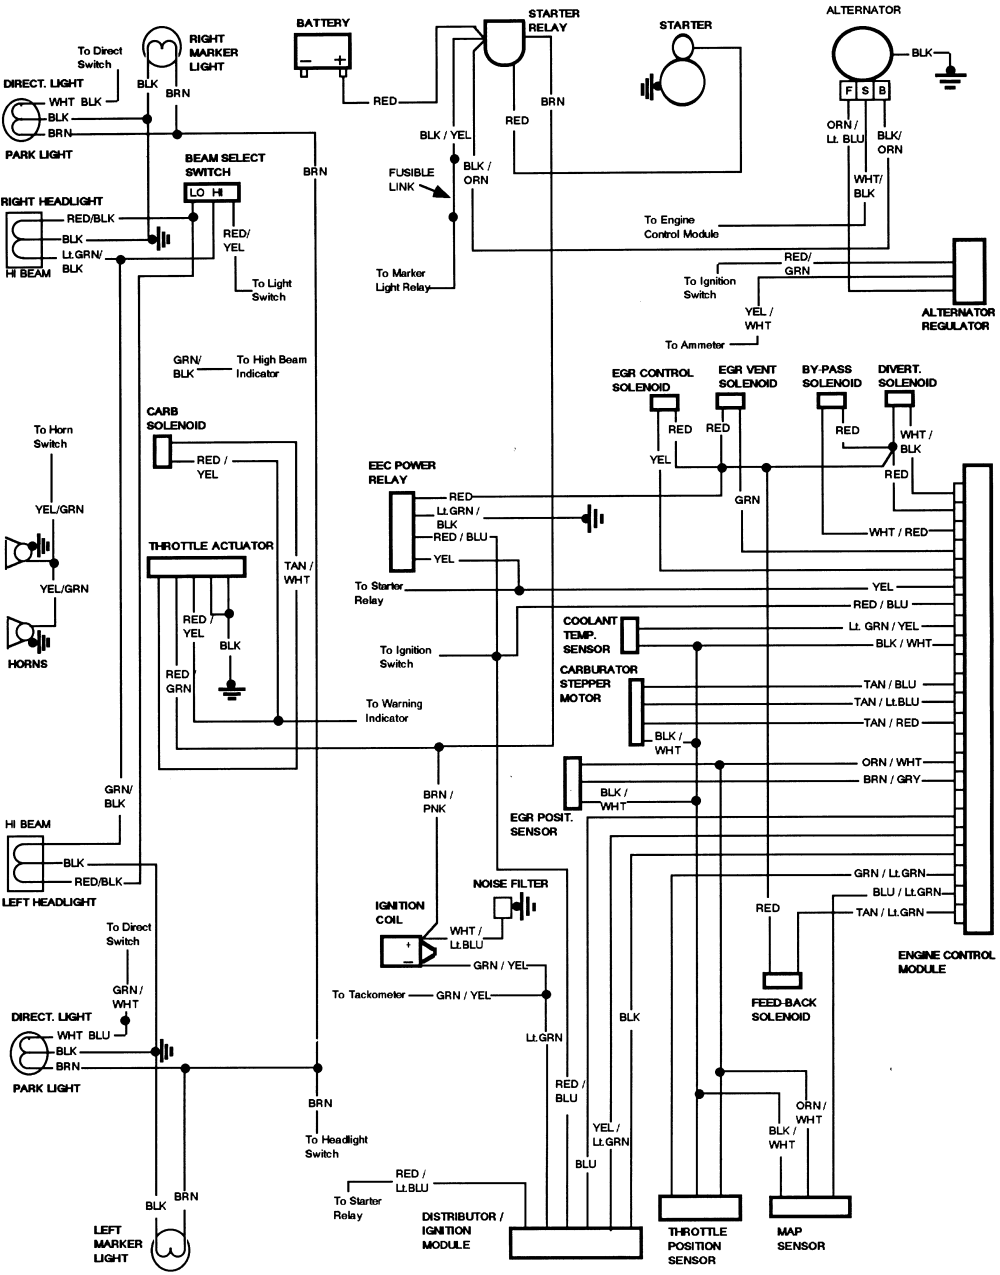 Ford F150 Headlight Wiring Diagram from cimg7.ibsrv.net